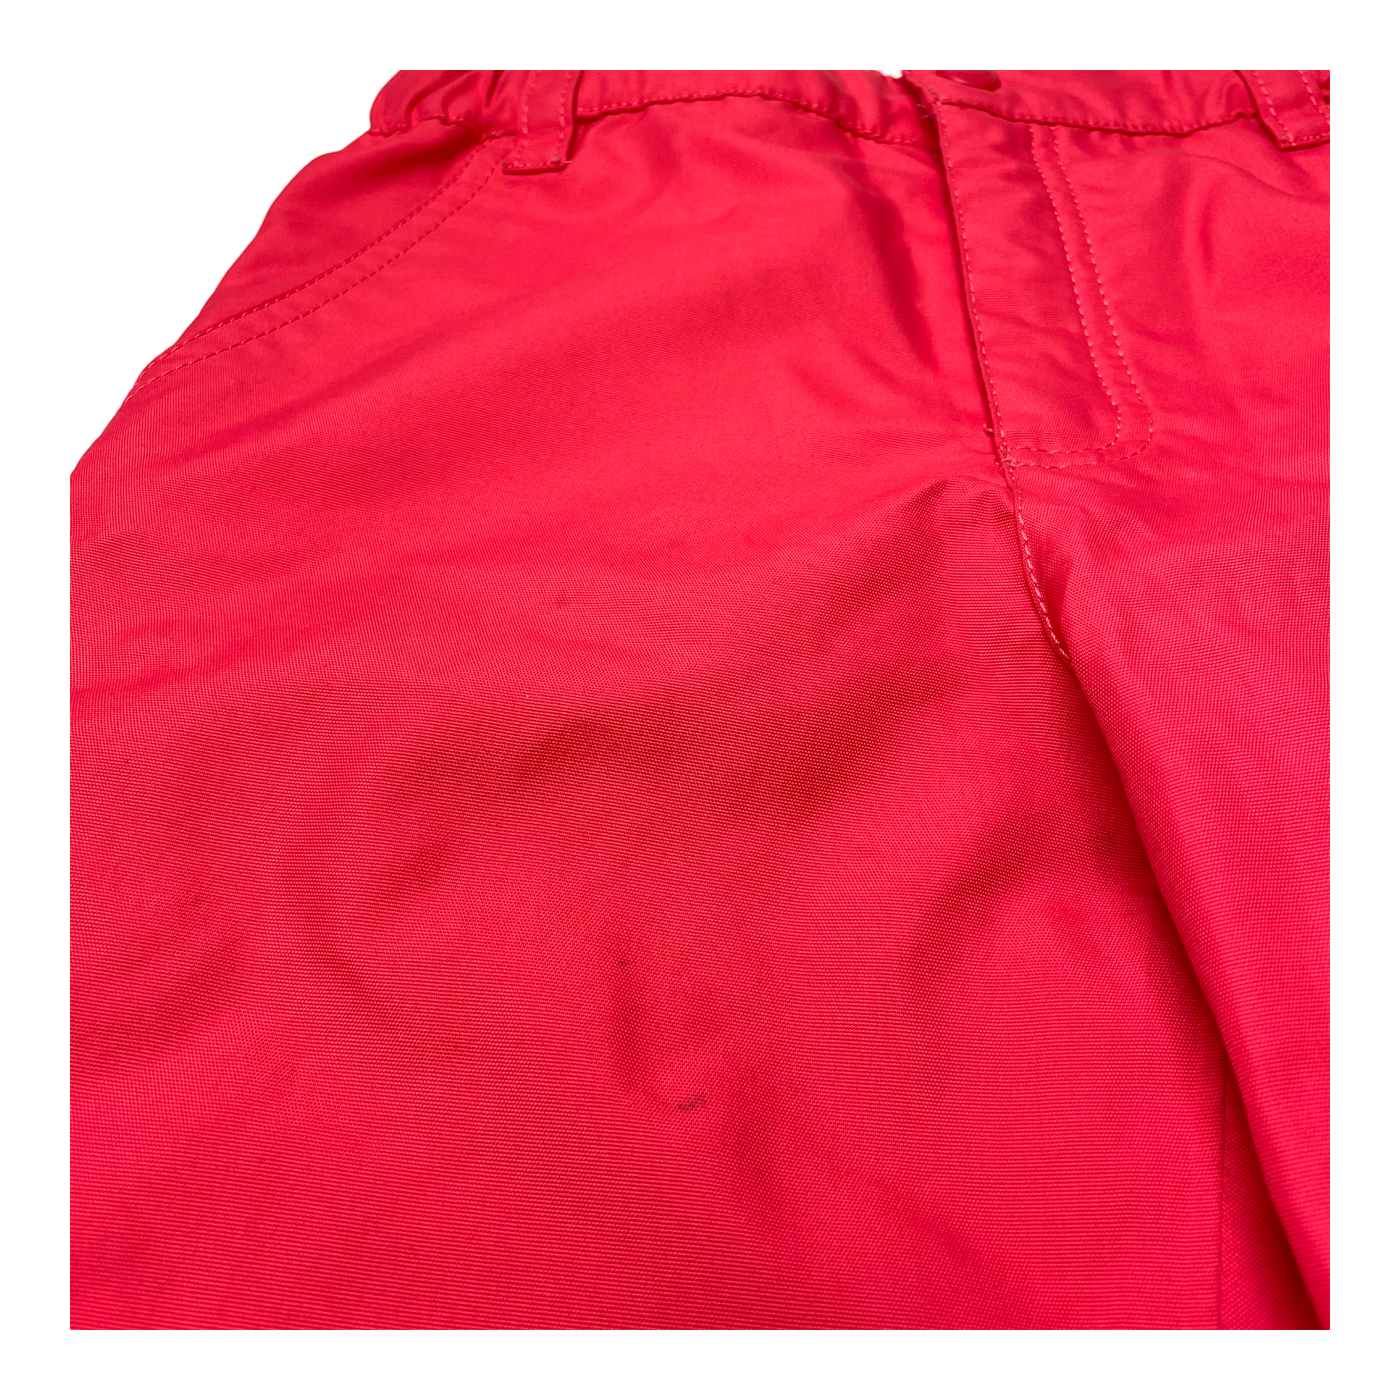 Reima shell pants, raspberry | 122cm